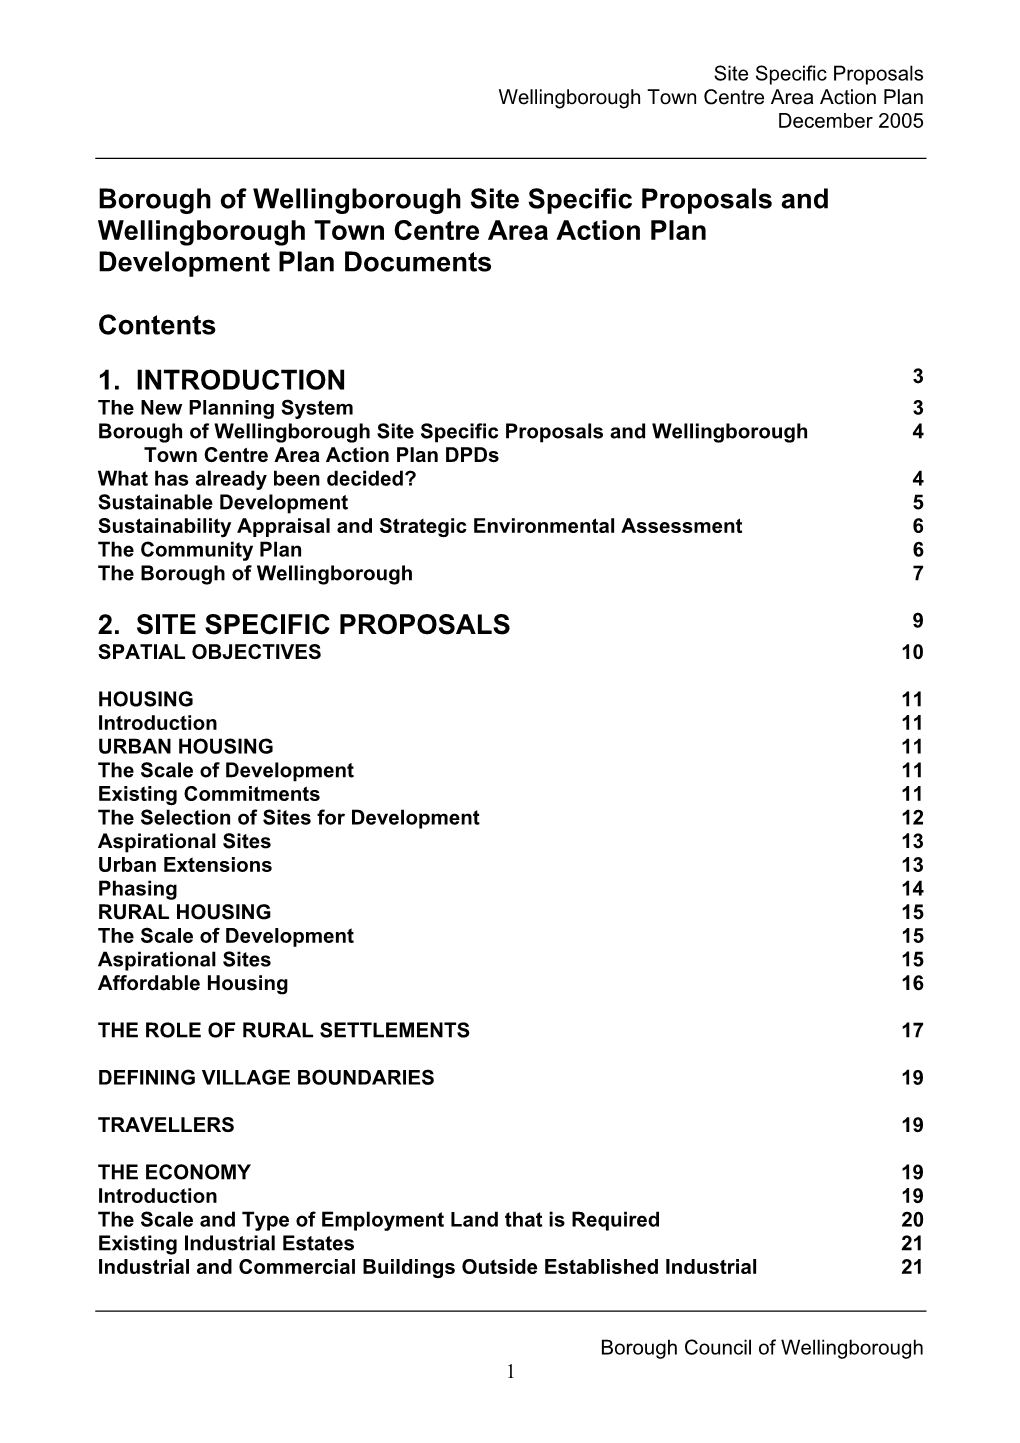 Borough of Wellingborough Site Specific Proposals and Wellingborough Town Centre Area Action Plan Development Plan Documents